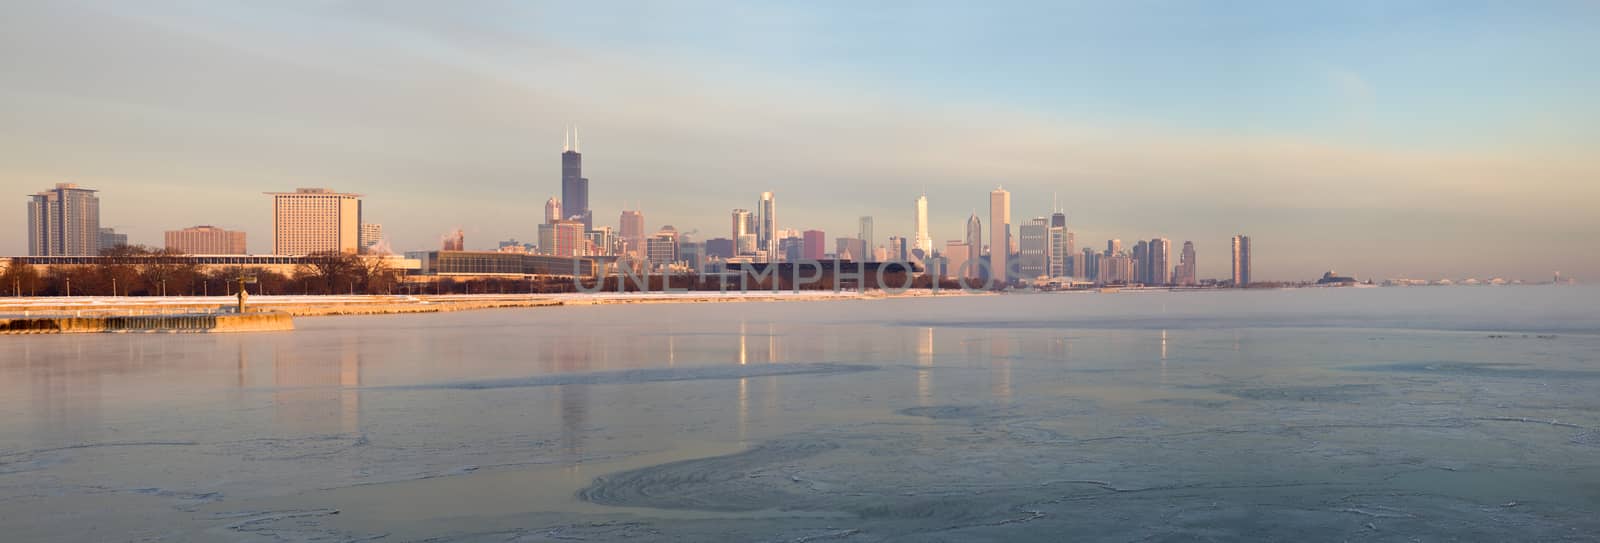 Panorama of Chicago at sunrise. Chicago, Illinois, USA.